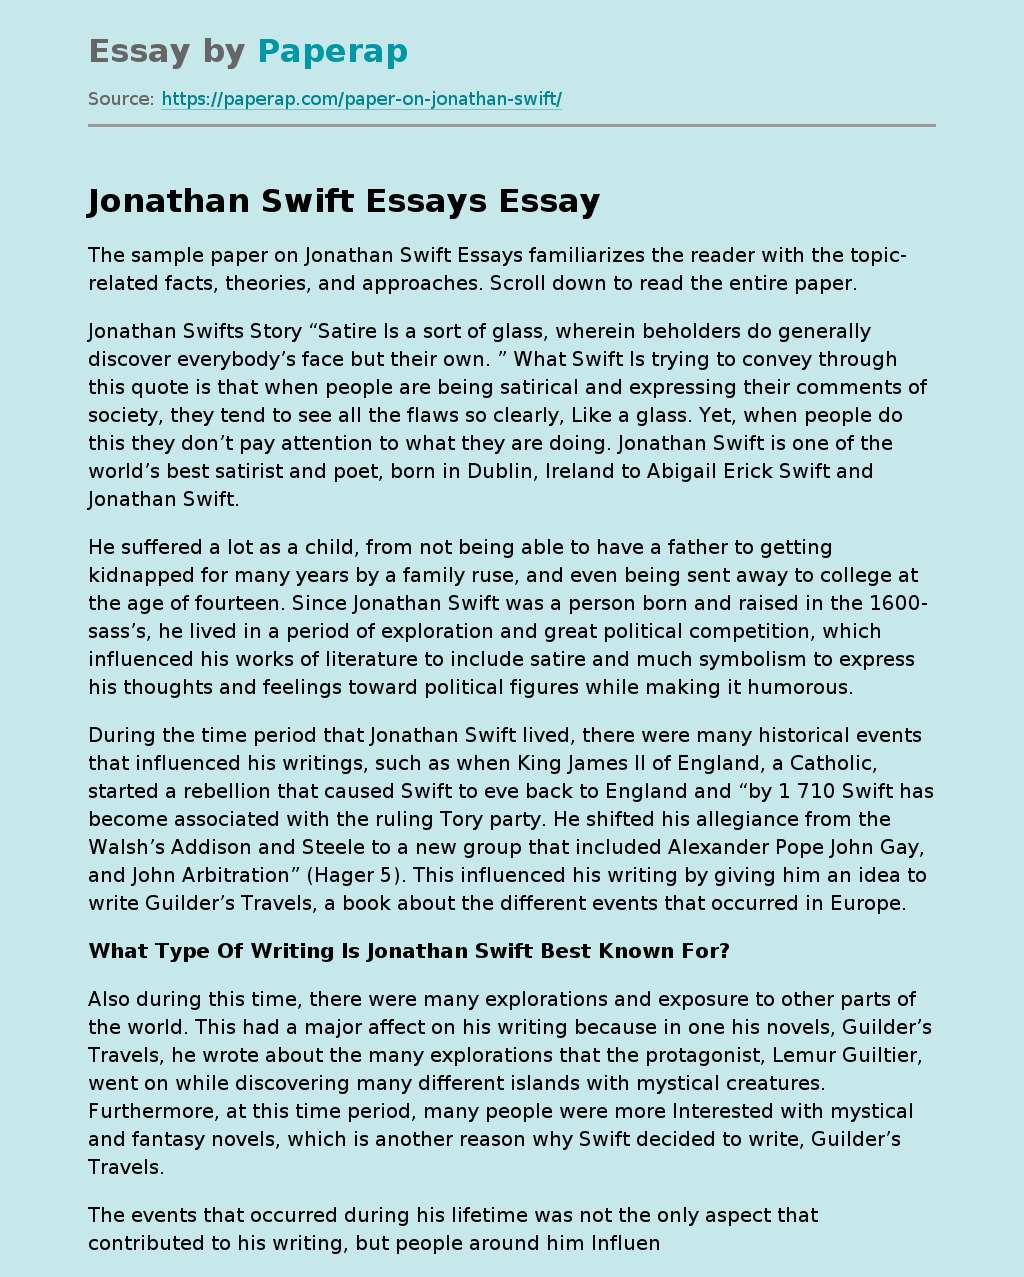 Sample Paper on Jonathan Swift Essays